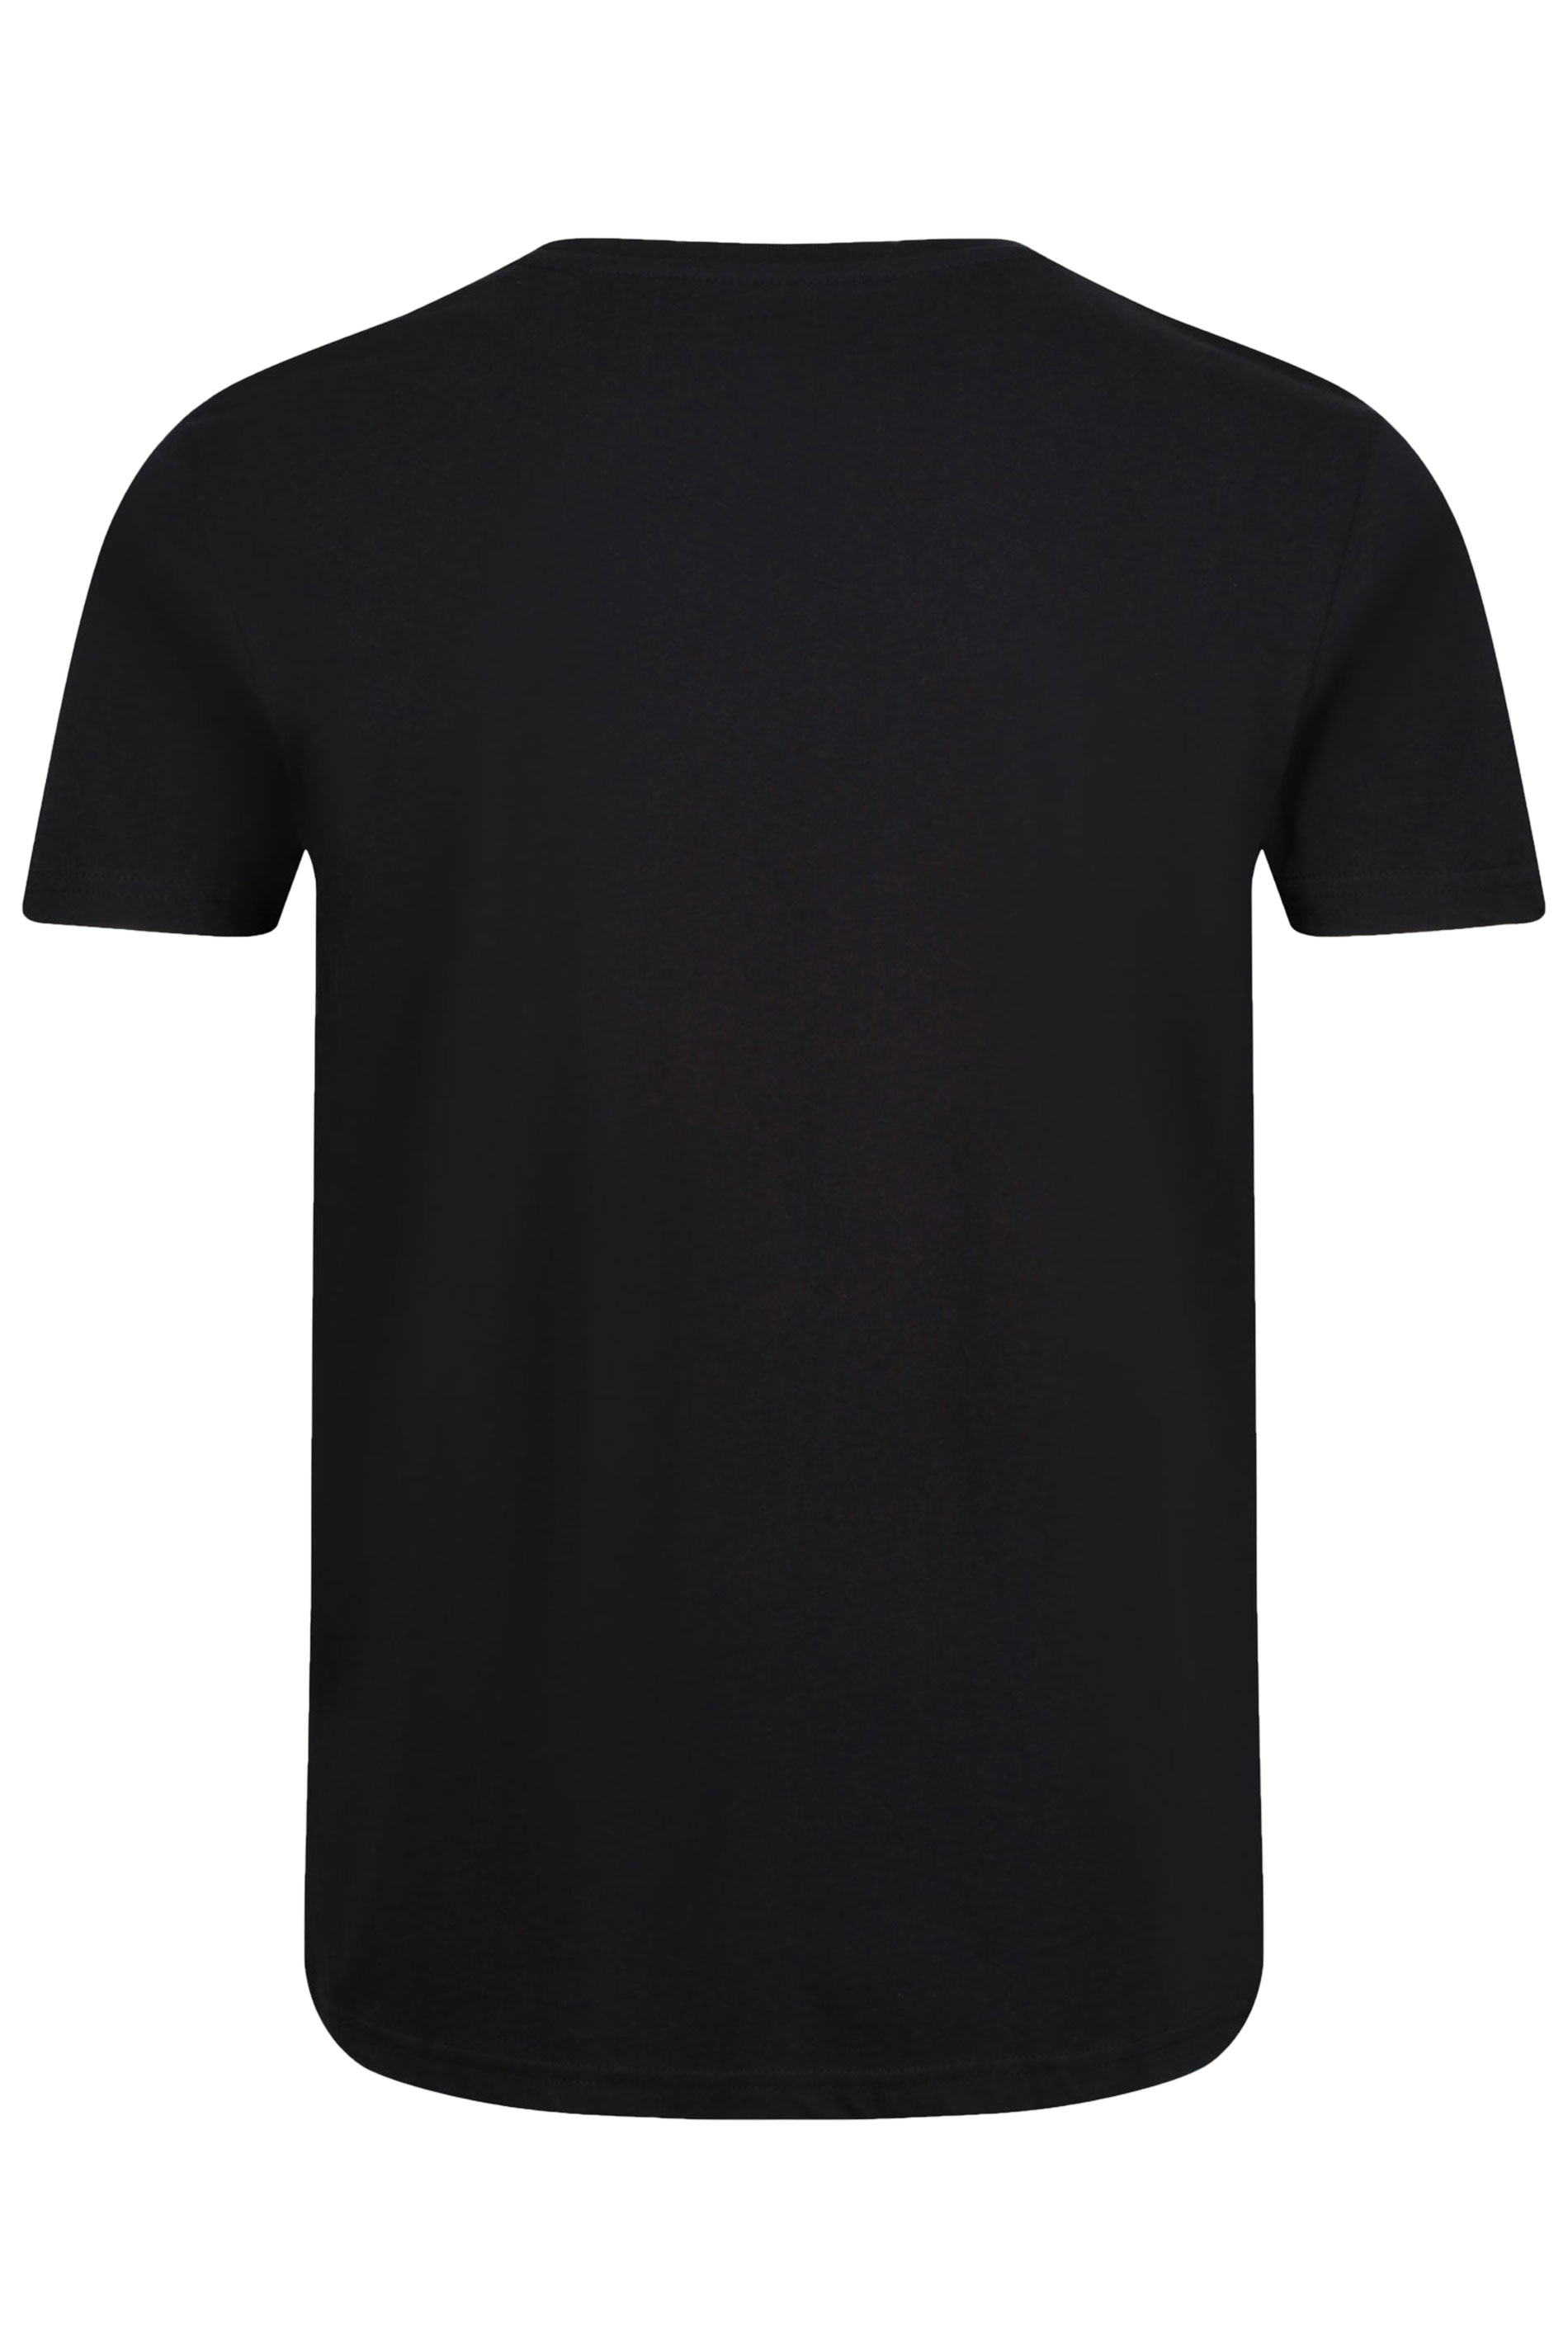 ALPHA INDUSTRIES 2 PACK Black Logo T-Shirts | BadRhino